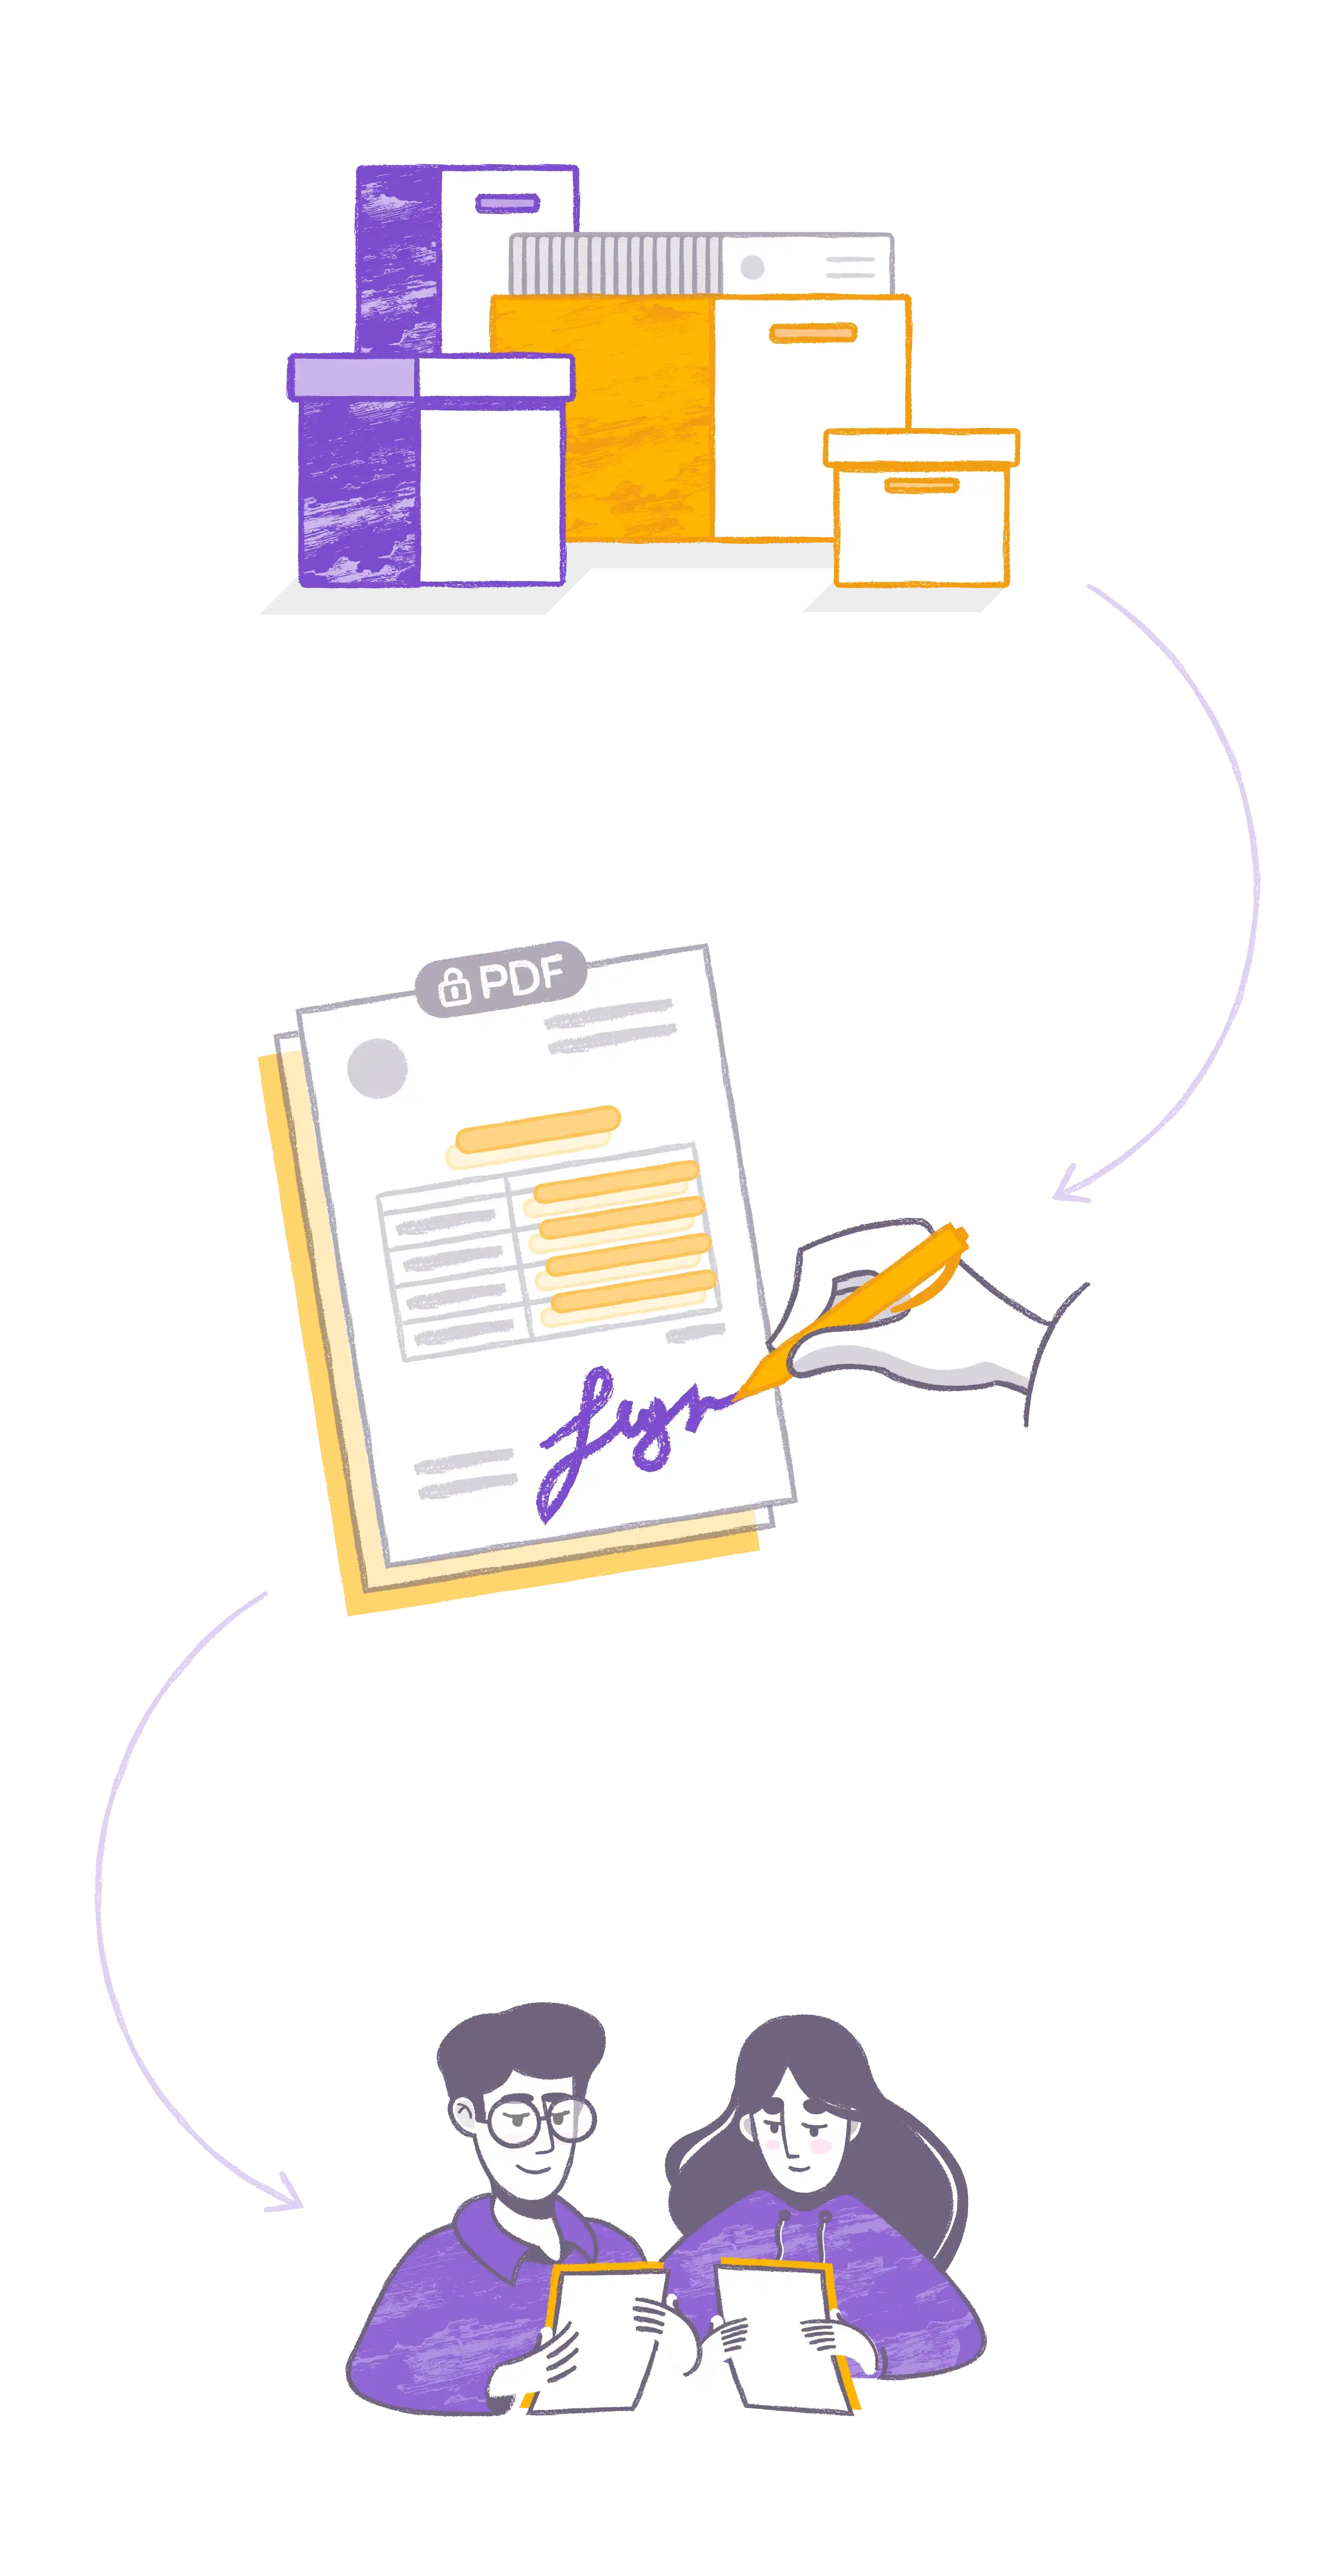 Automatically send documents for e-signature